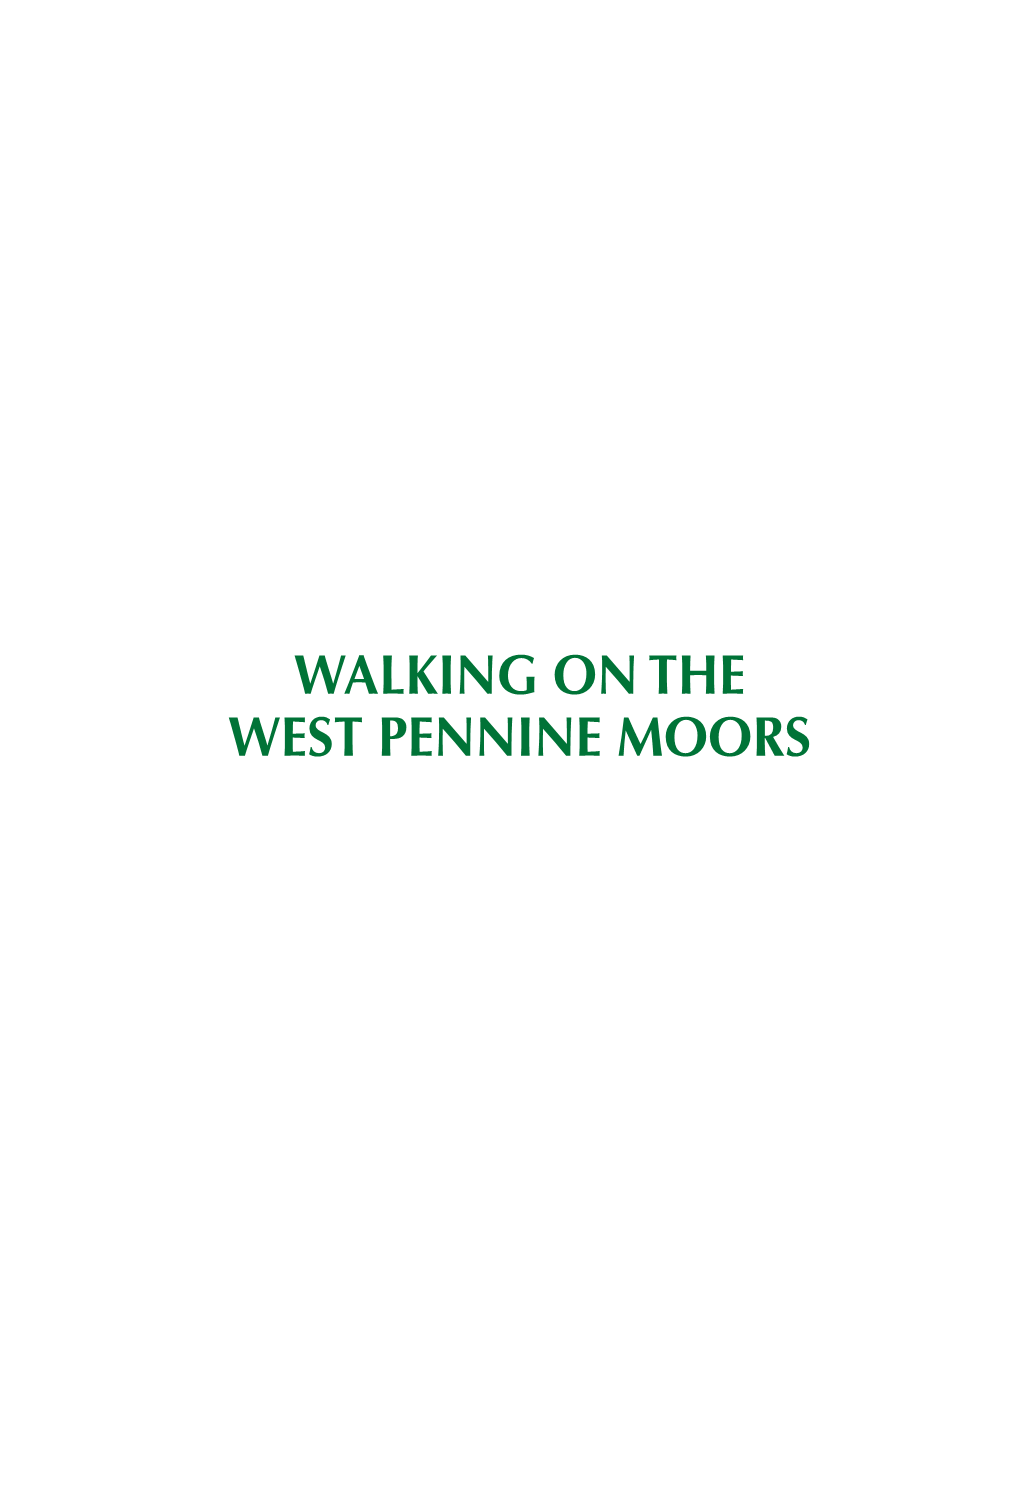 Walking on the West Pennine Moors